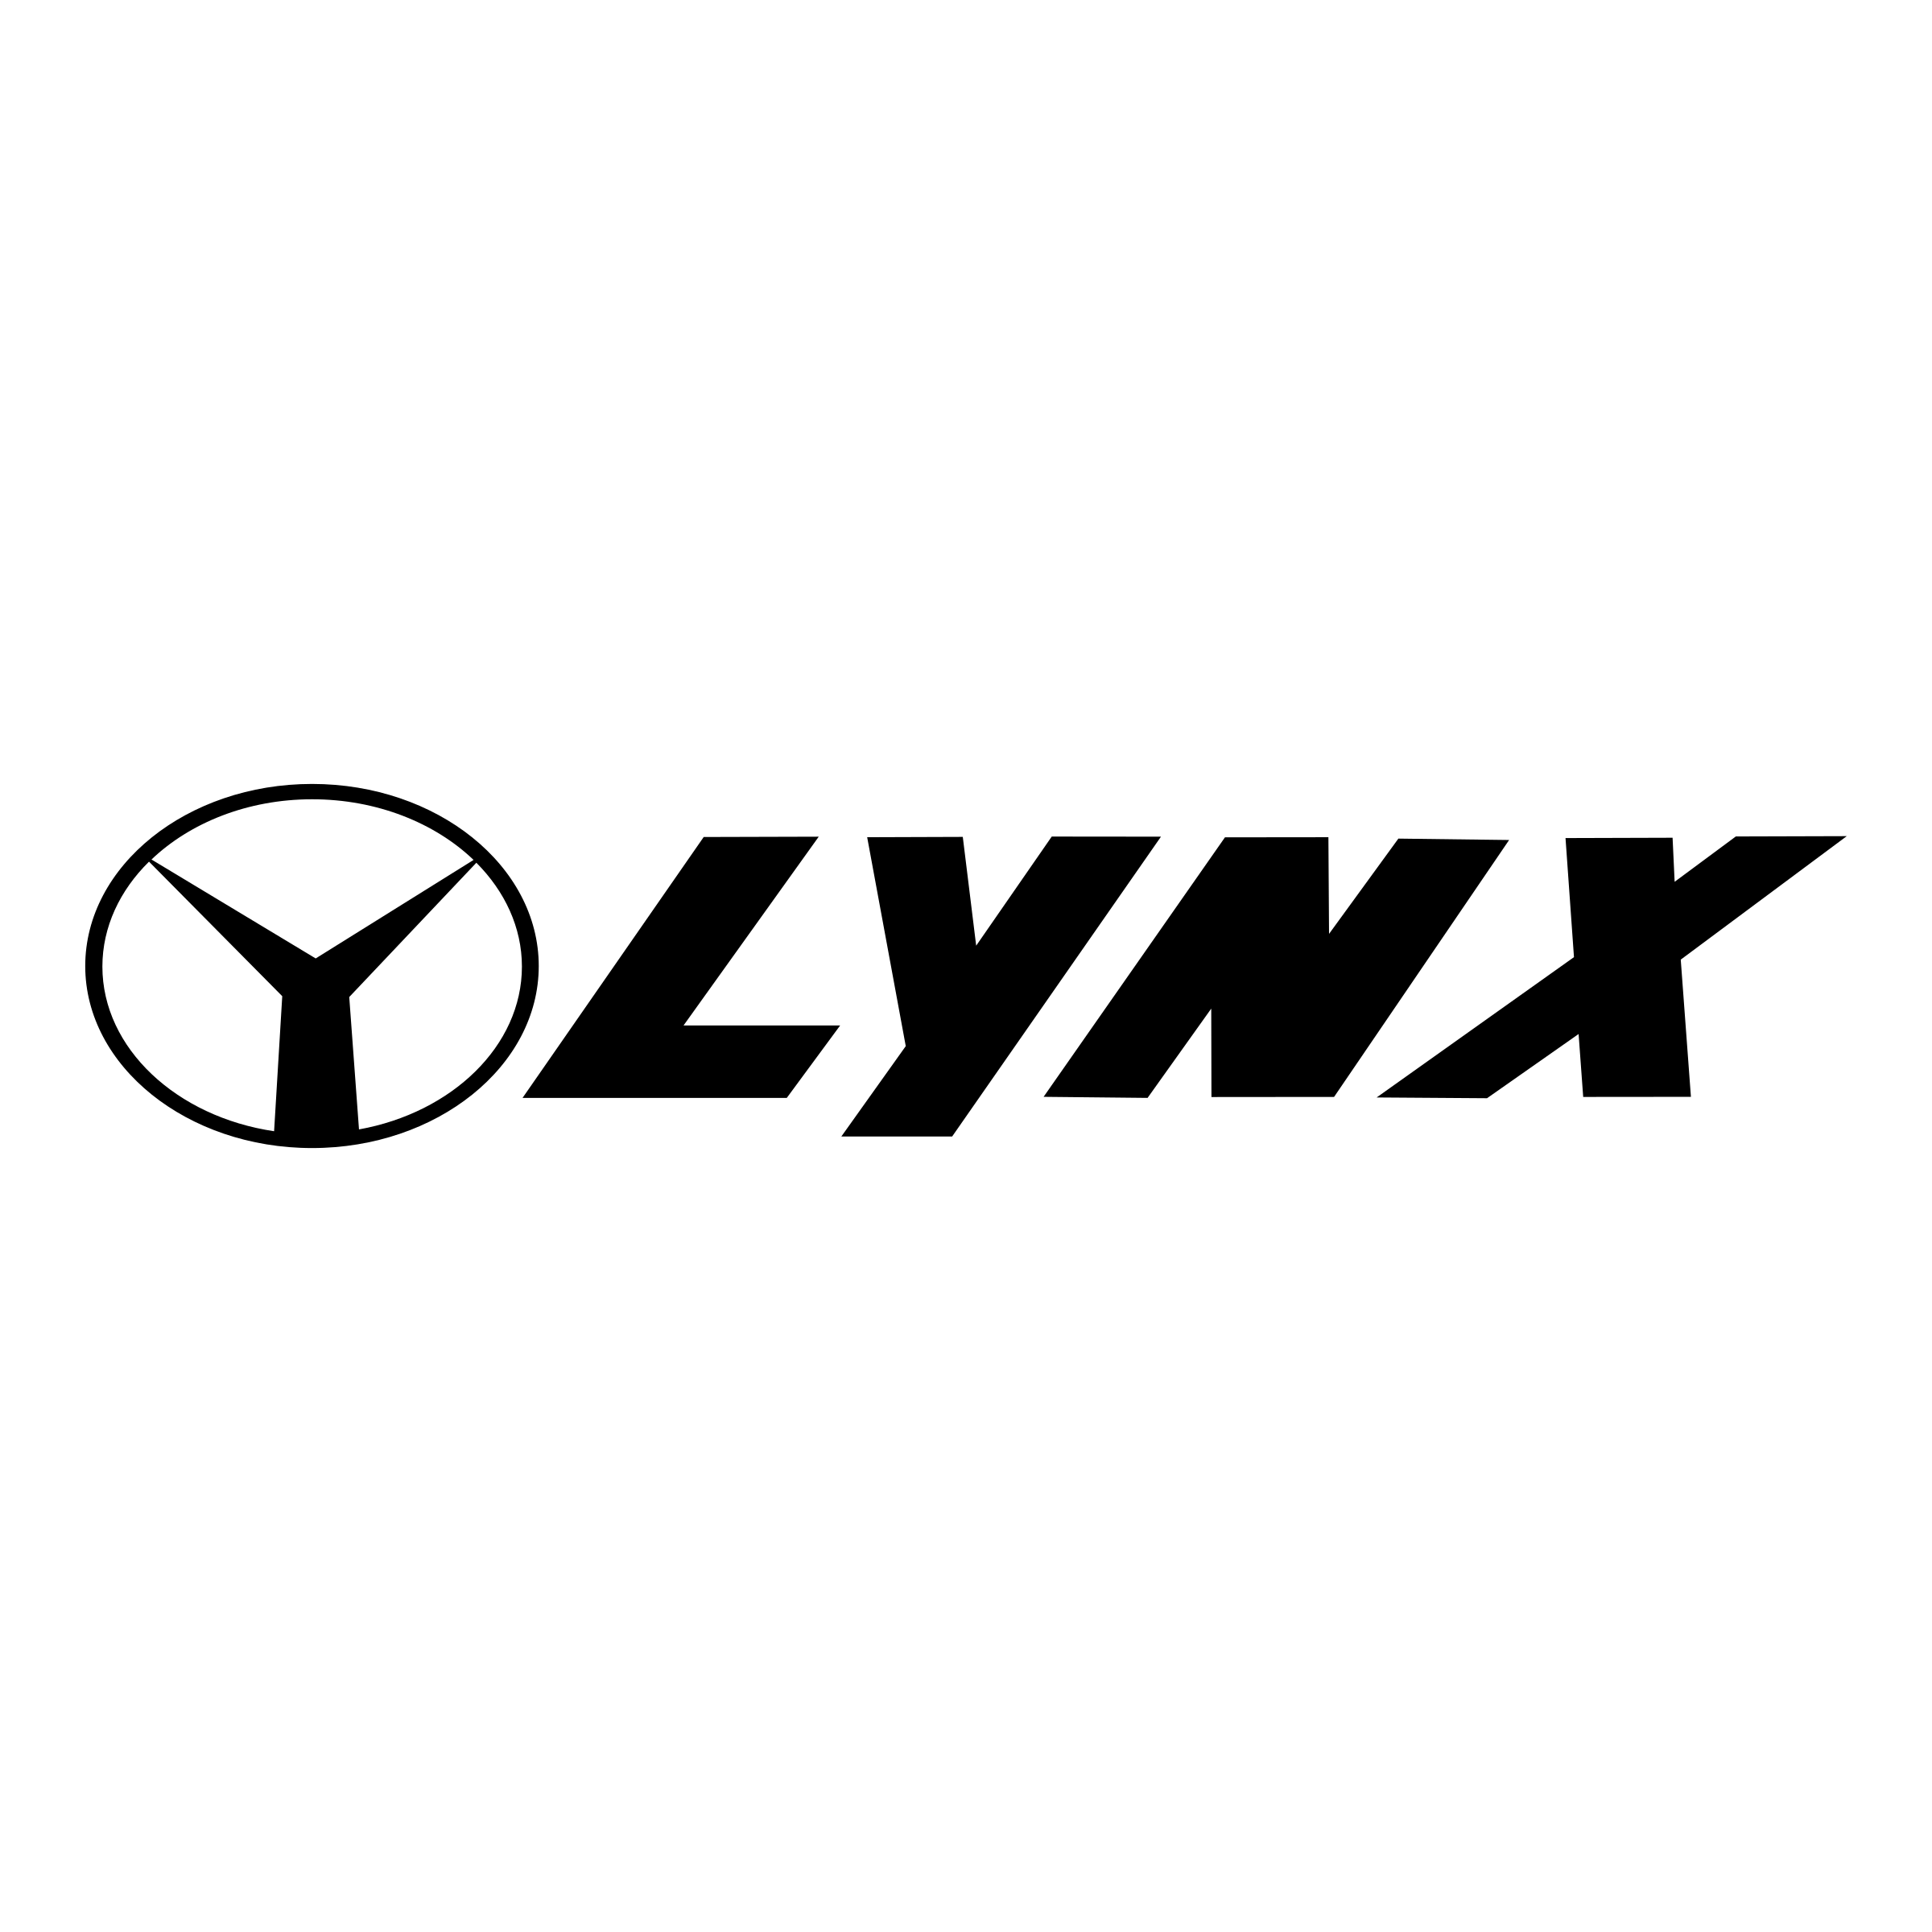 Lynx Logo - LYNX Logo PNG Transparent & SVG Vector - Freebie Supply